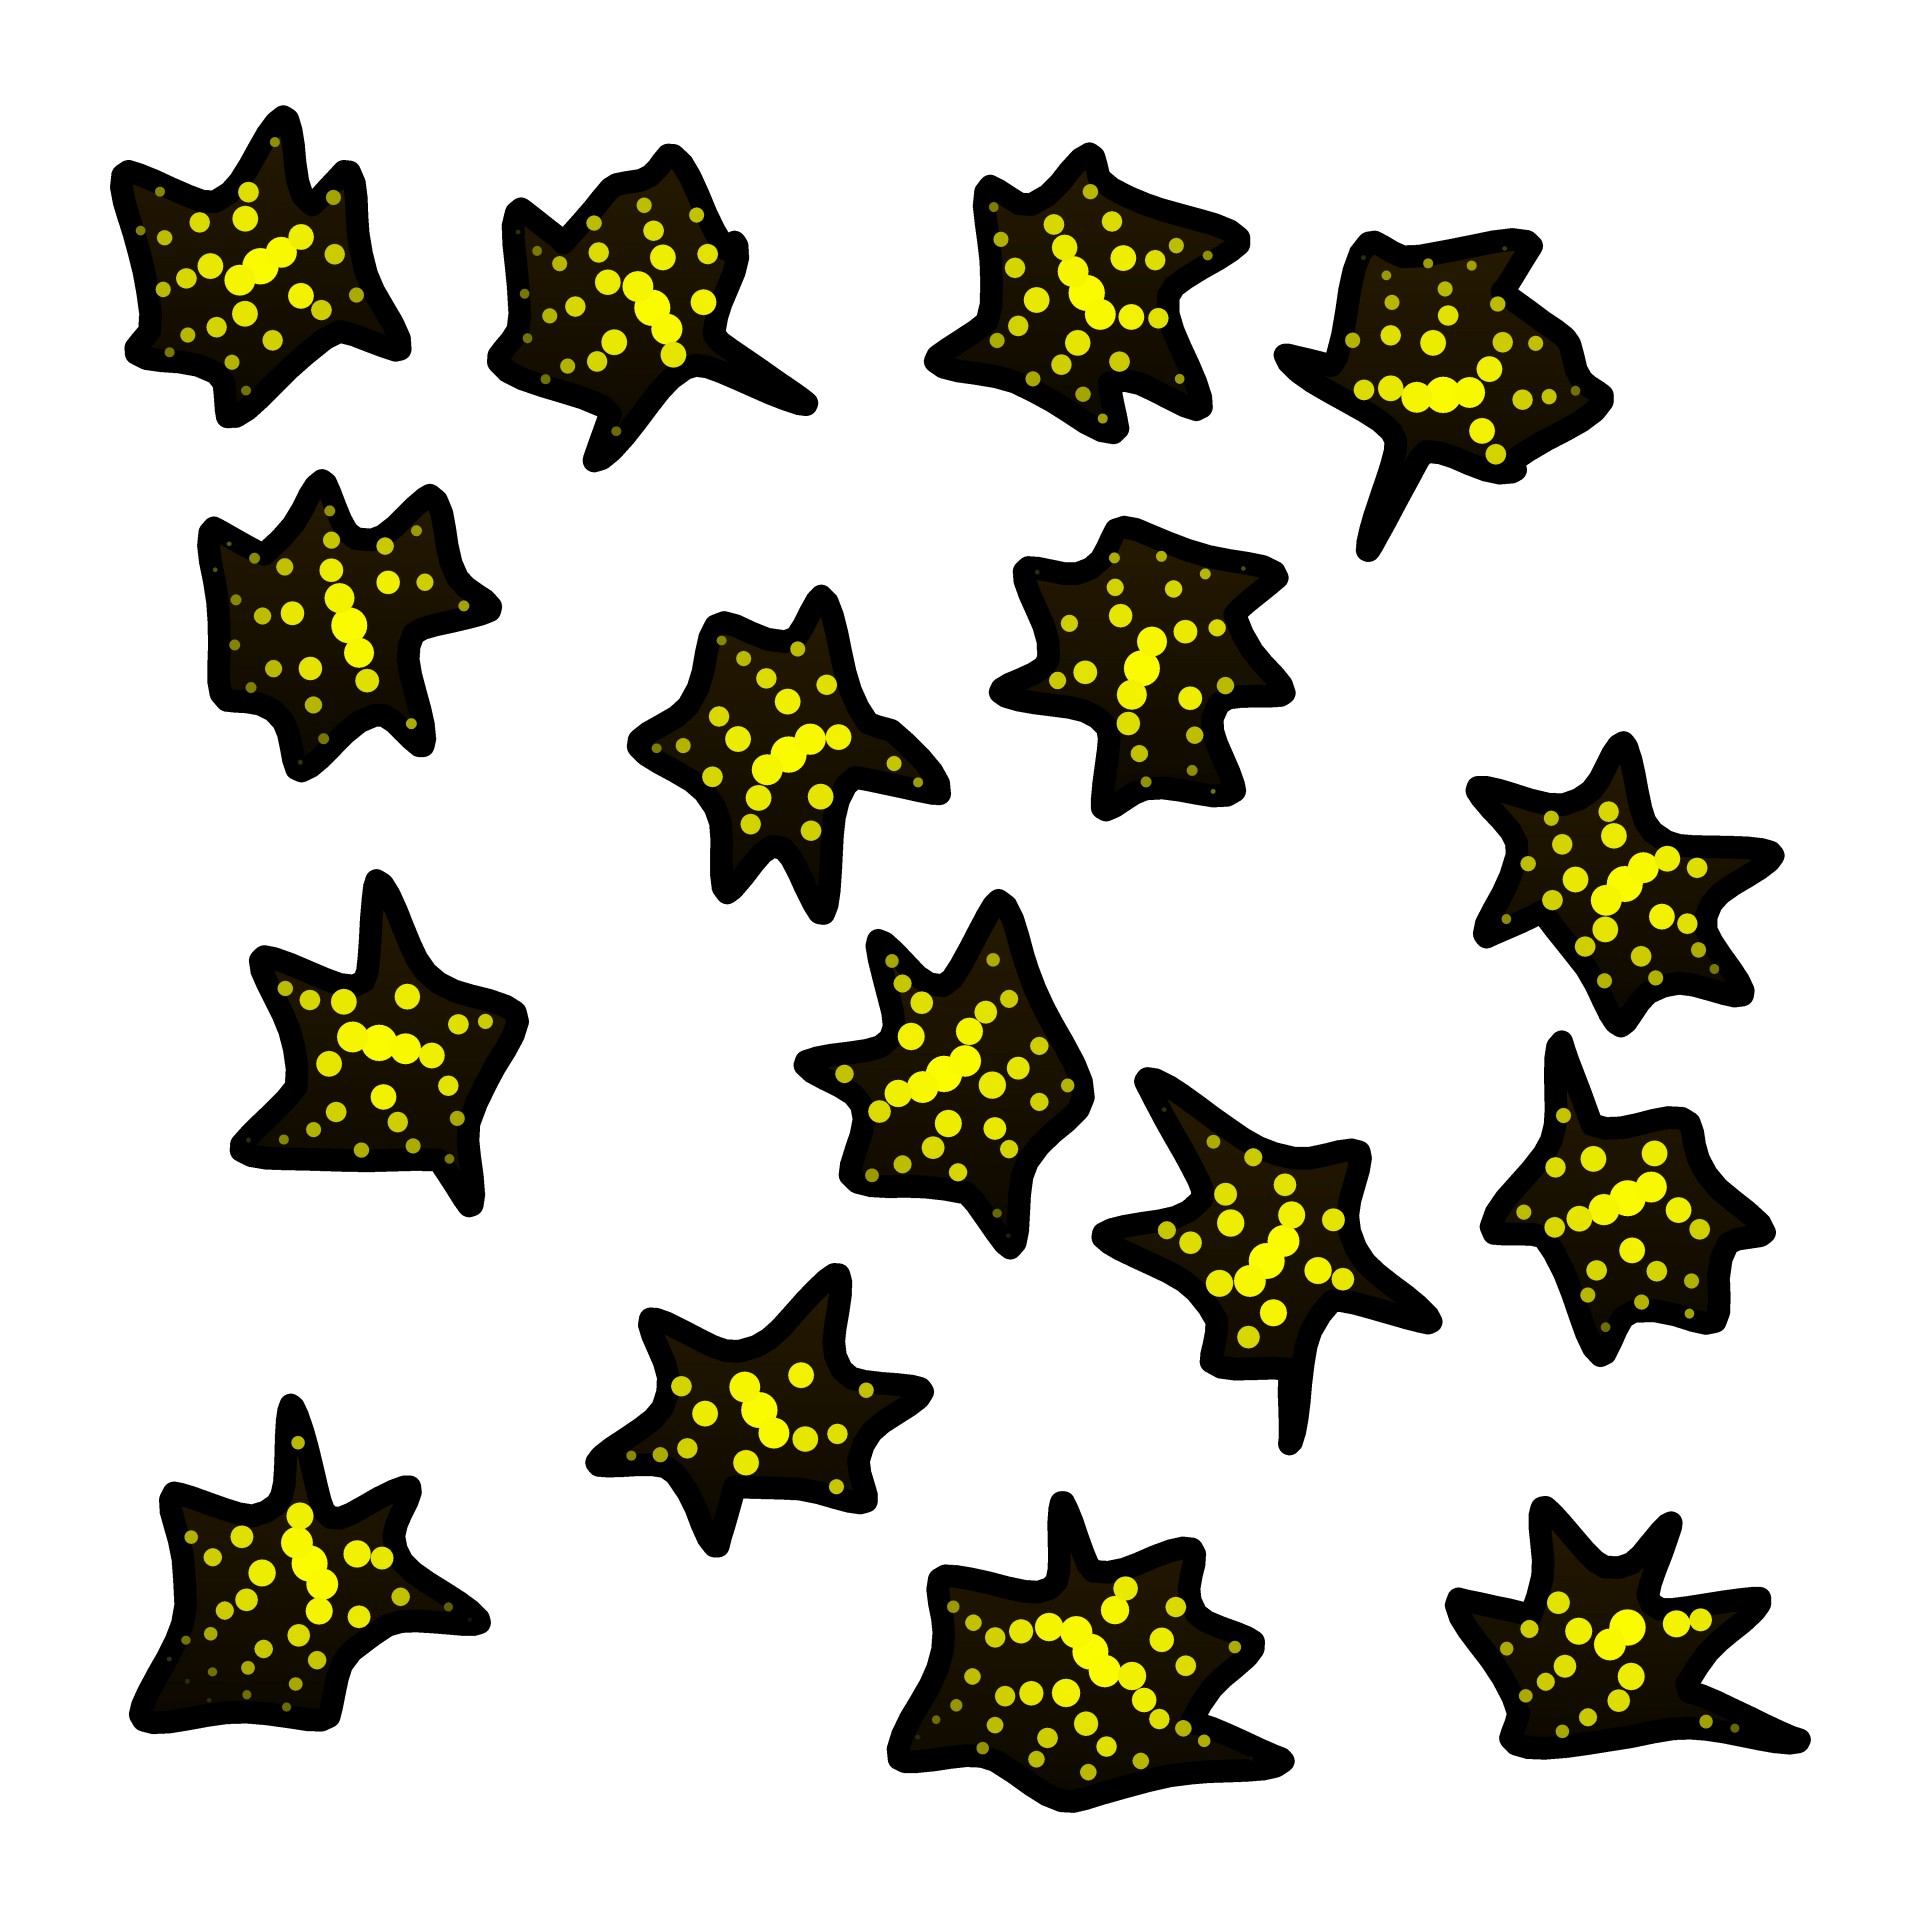 small stars drawing free photo